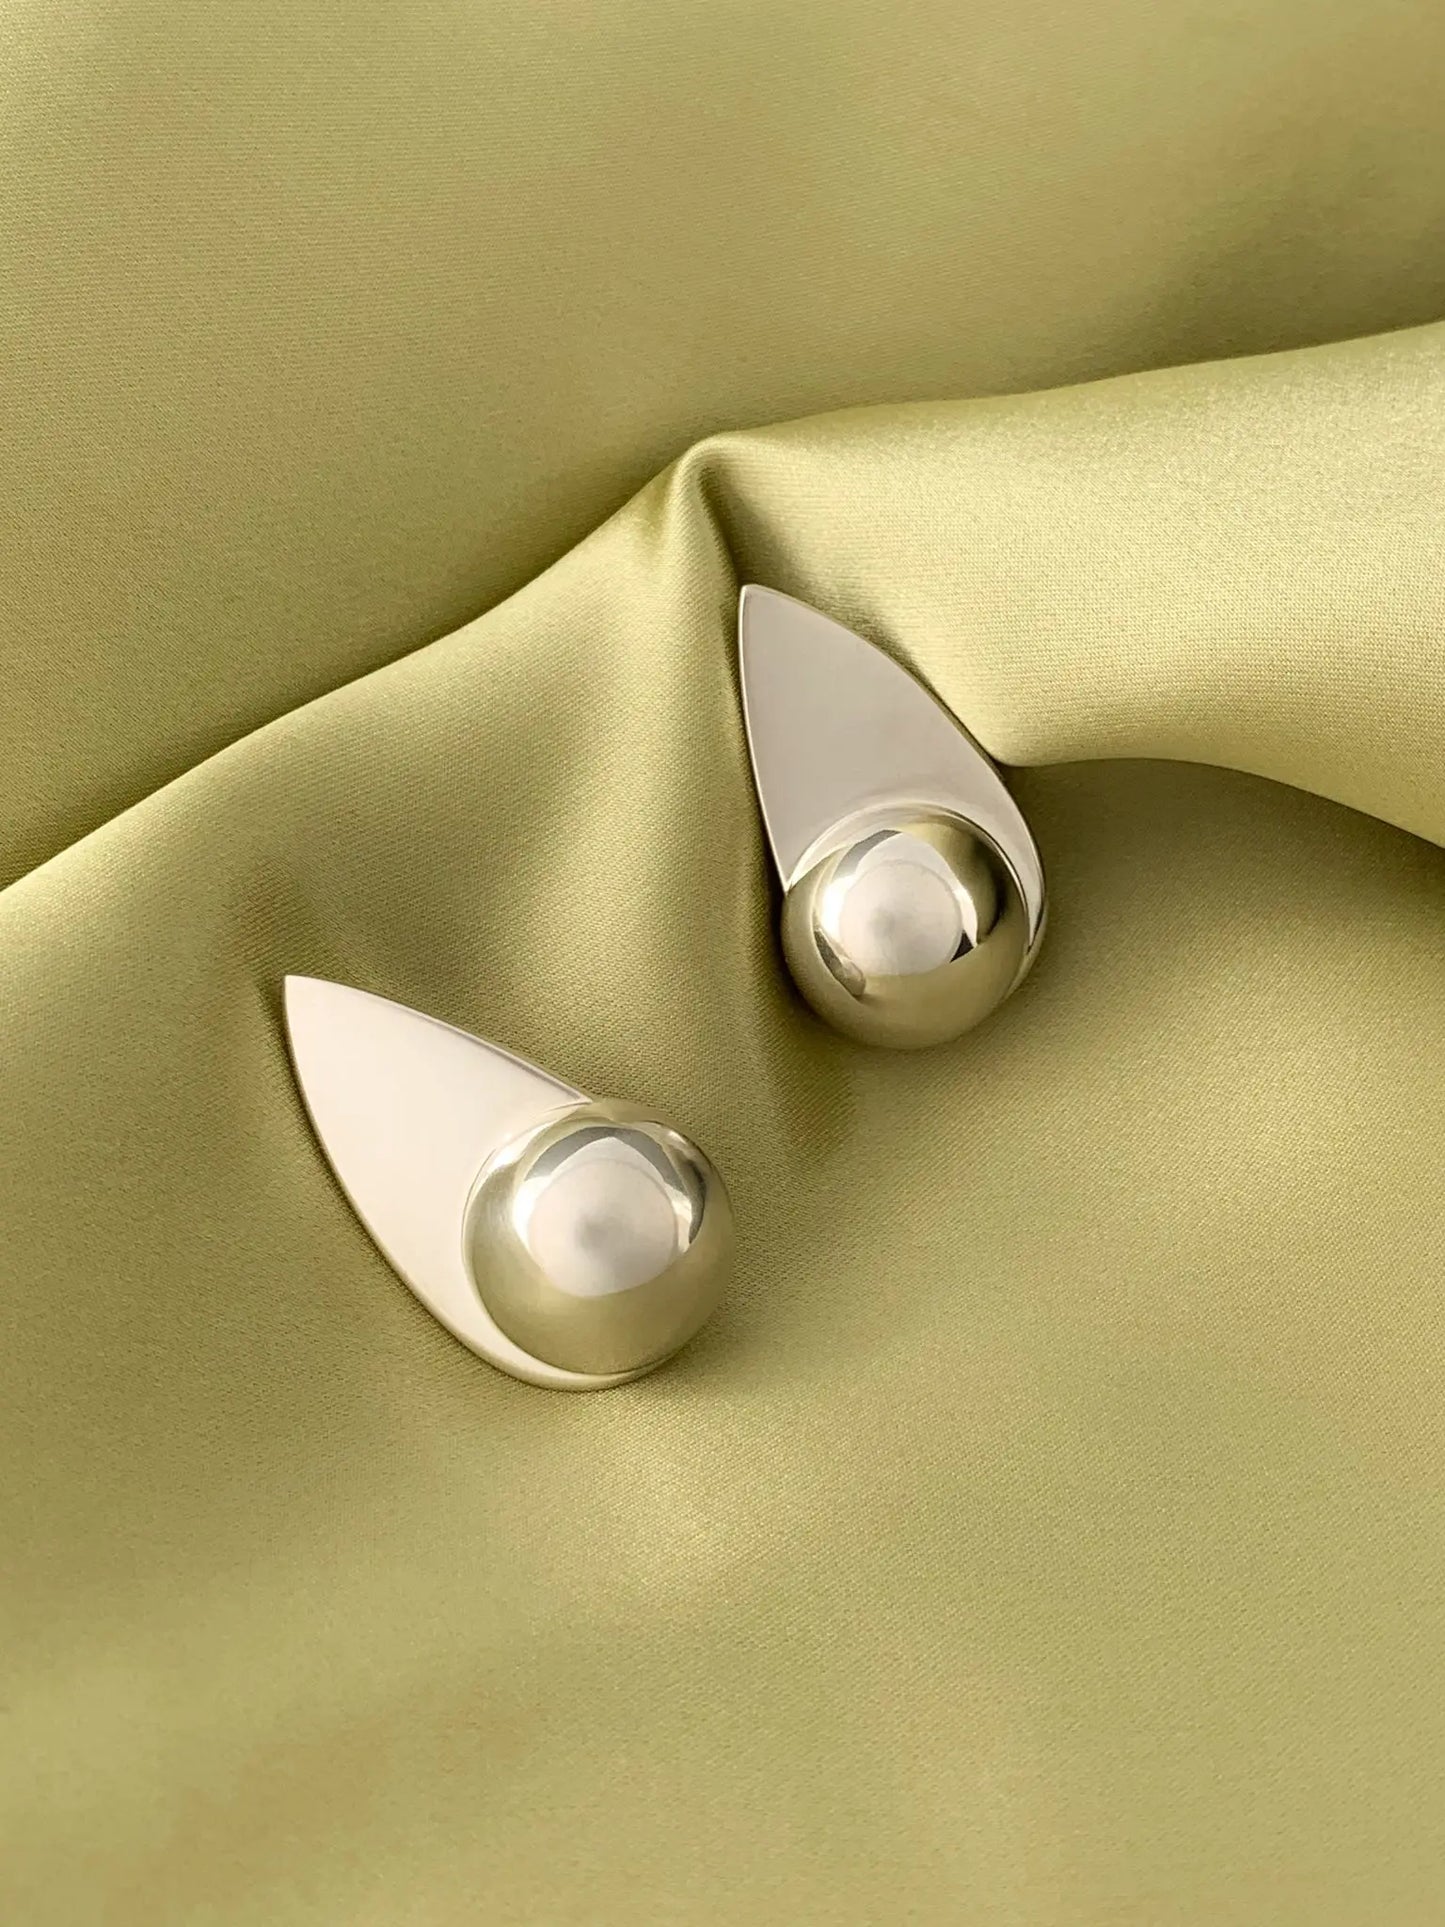 Spring Earrings In Silver Sara Robertsson Jewellery